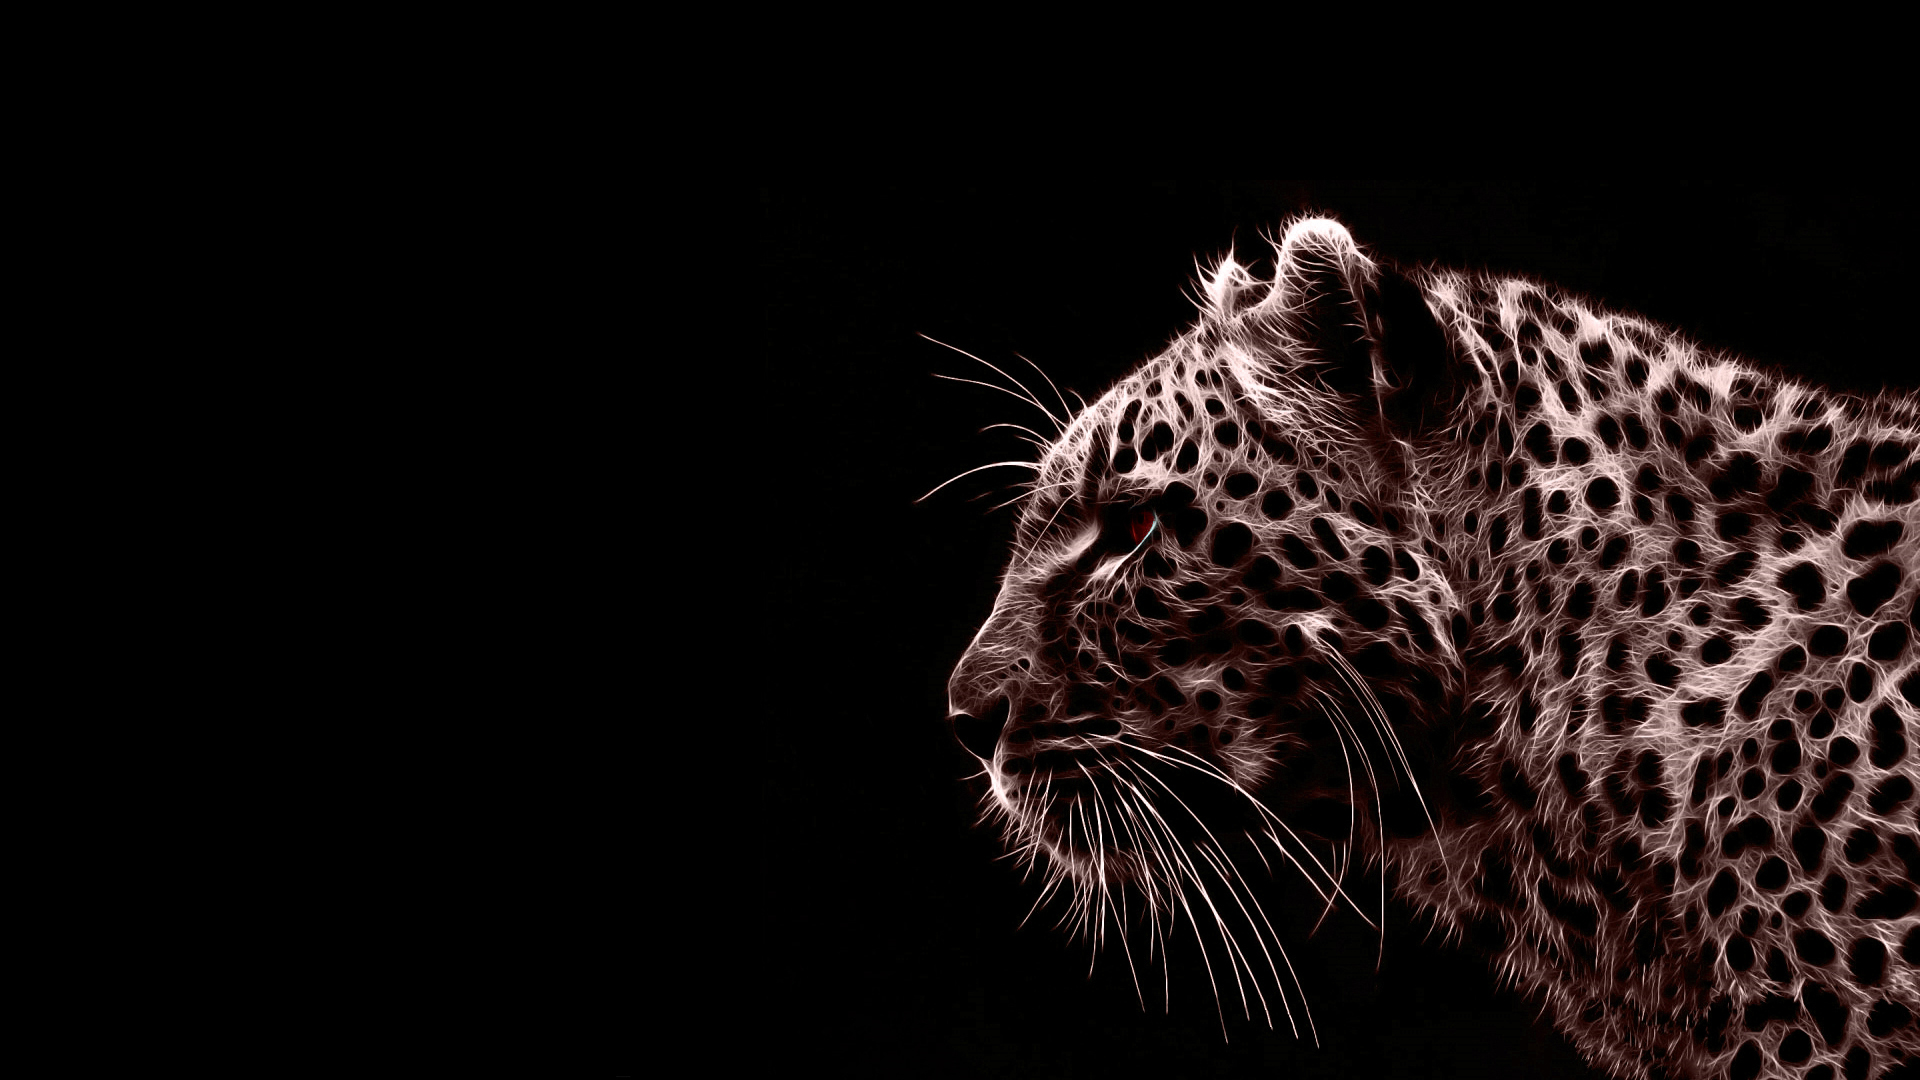 animals, jaguars, photo manipulation, black background - desktop wallpaper